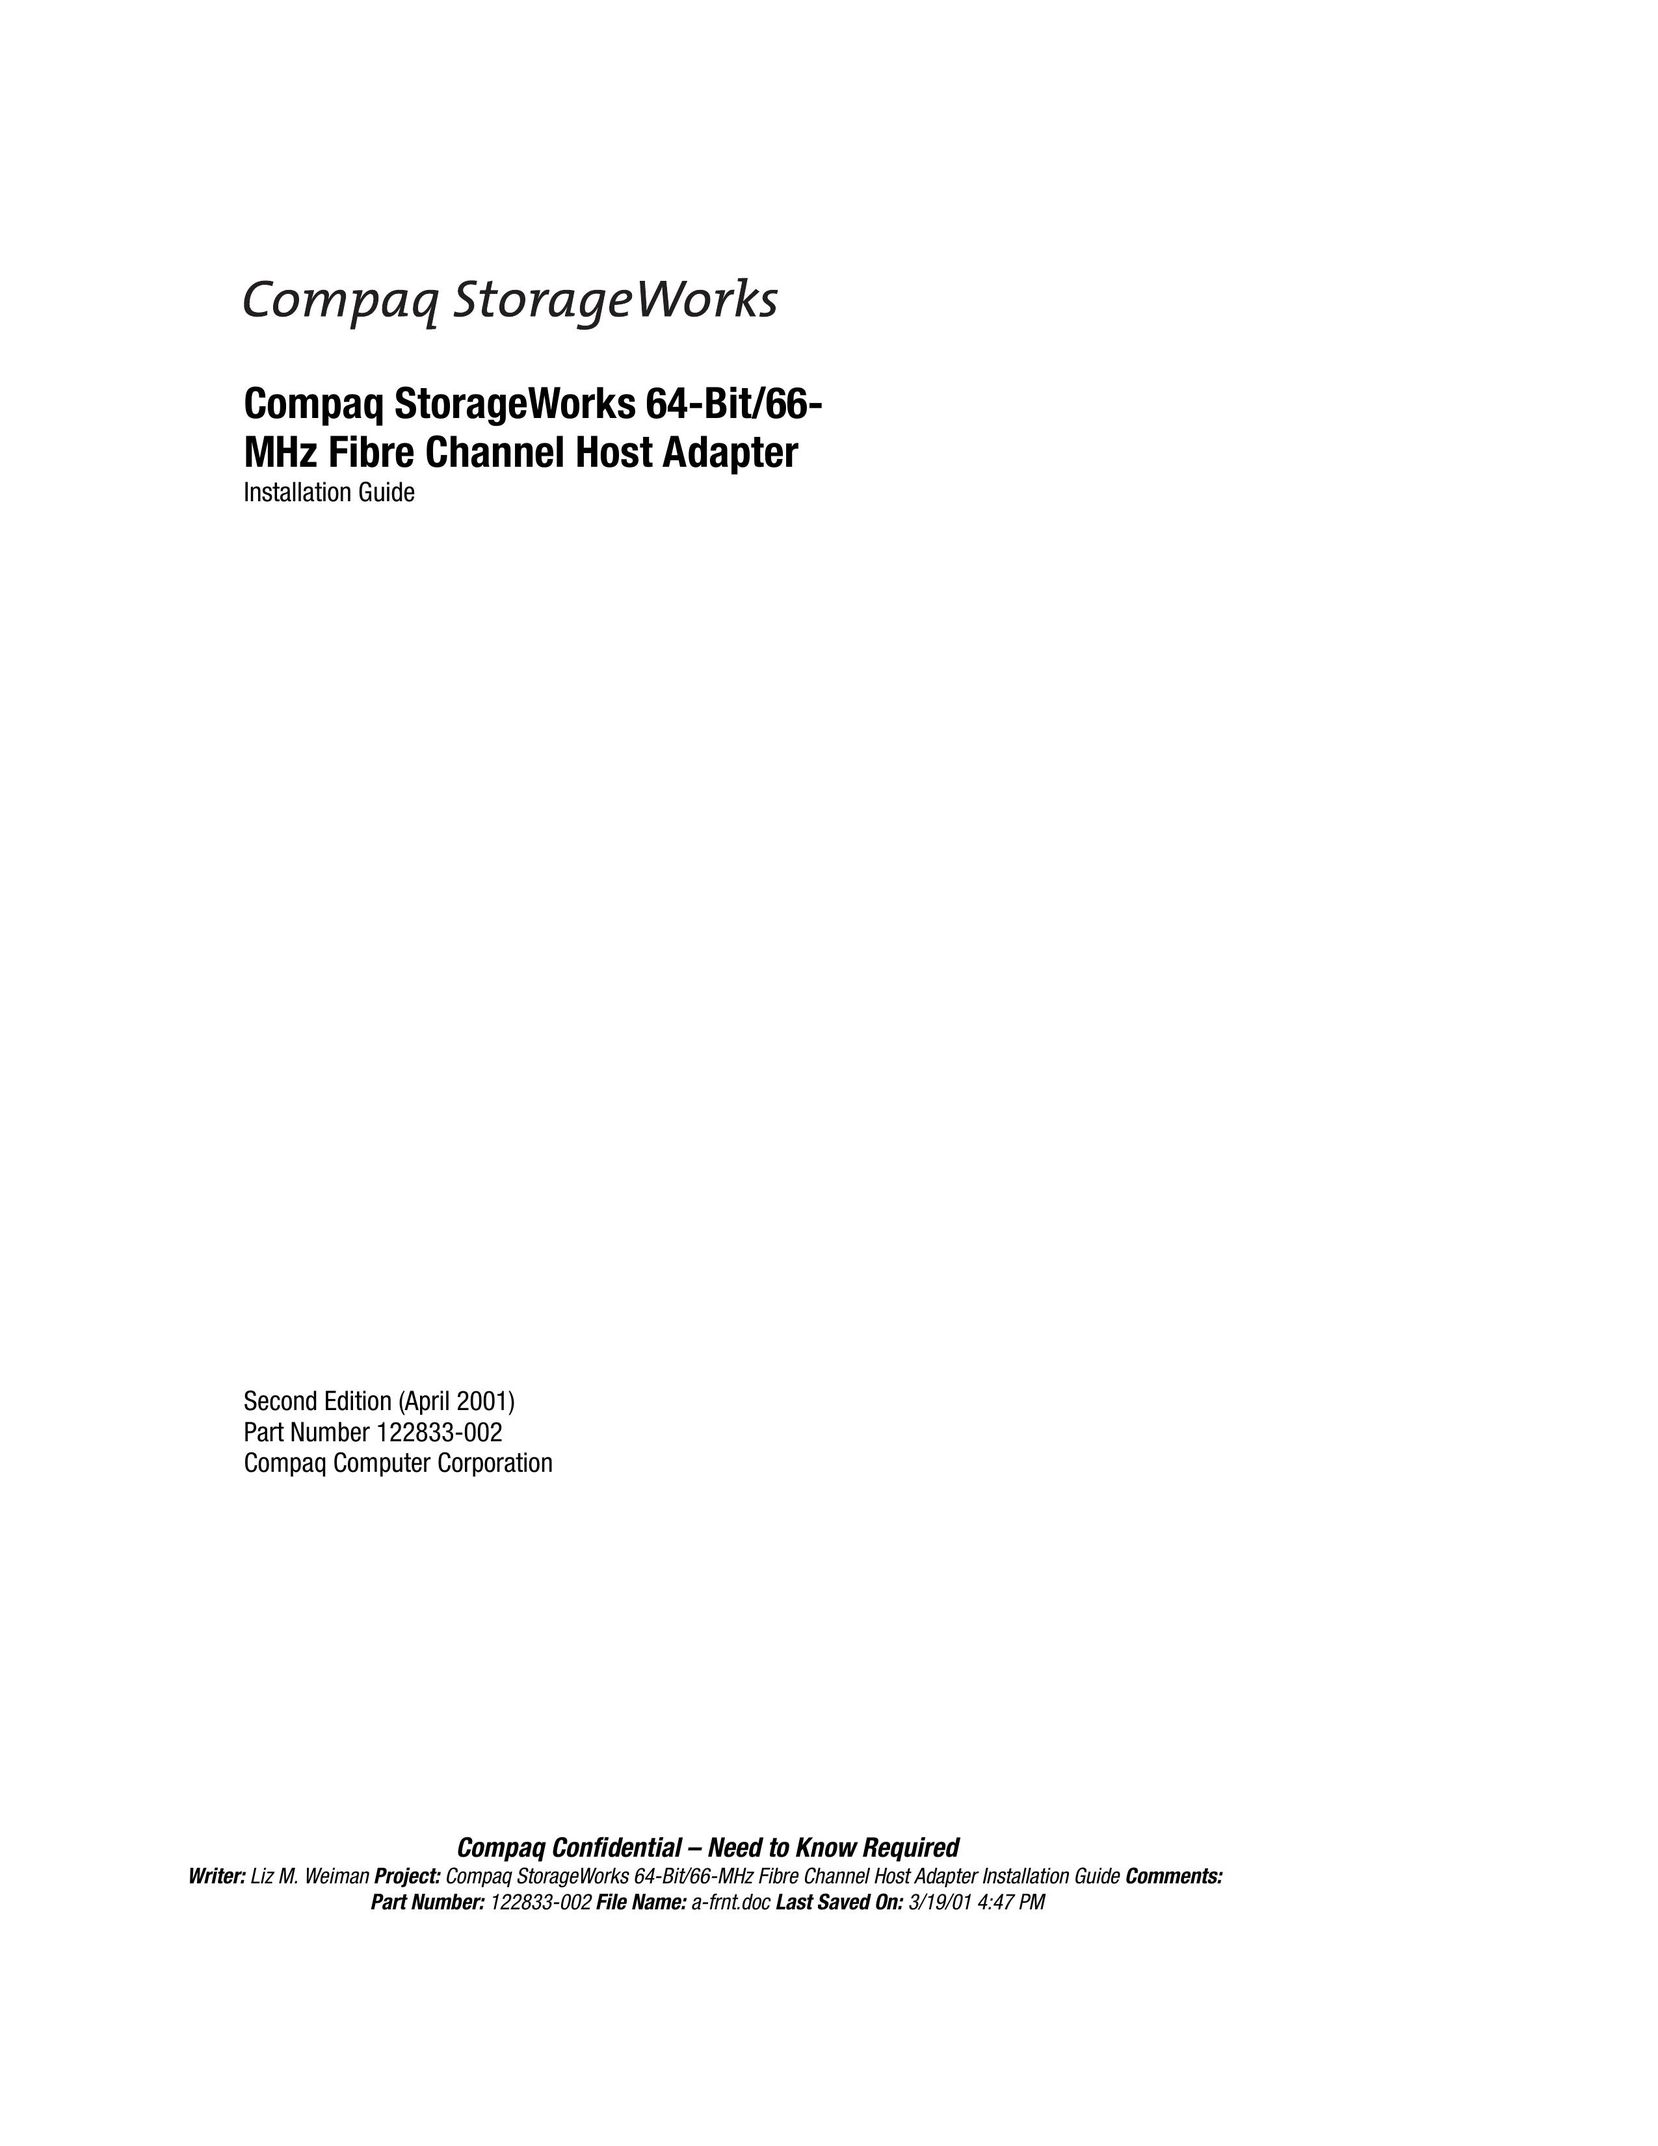 Compaq 64-Bit Network Card User Manual